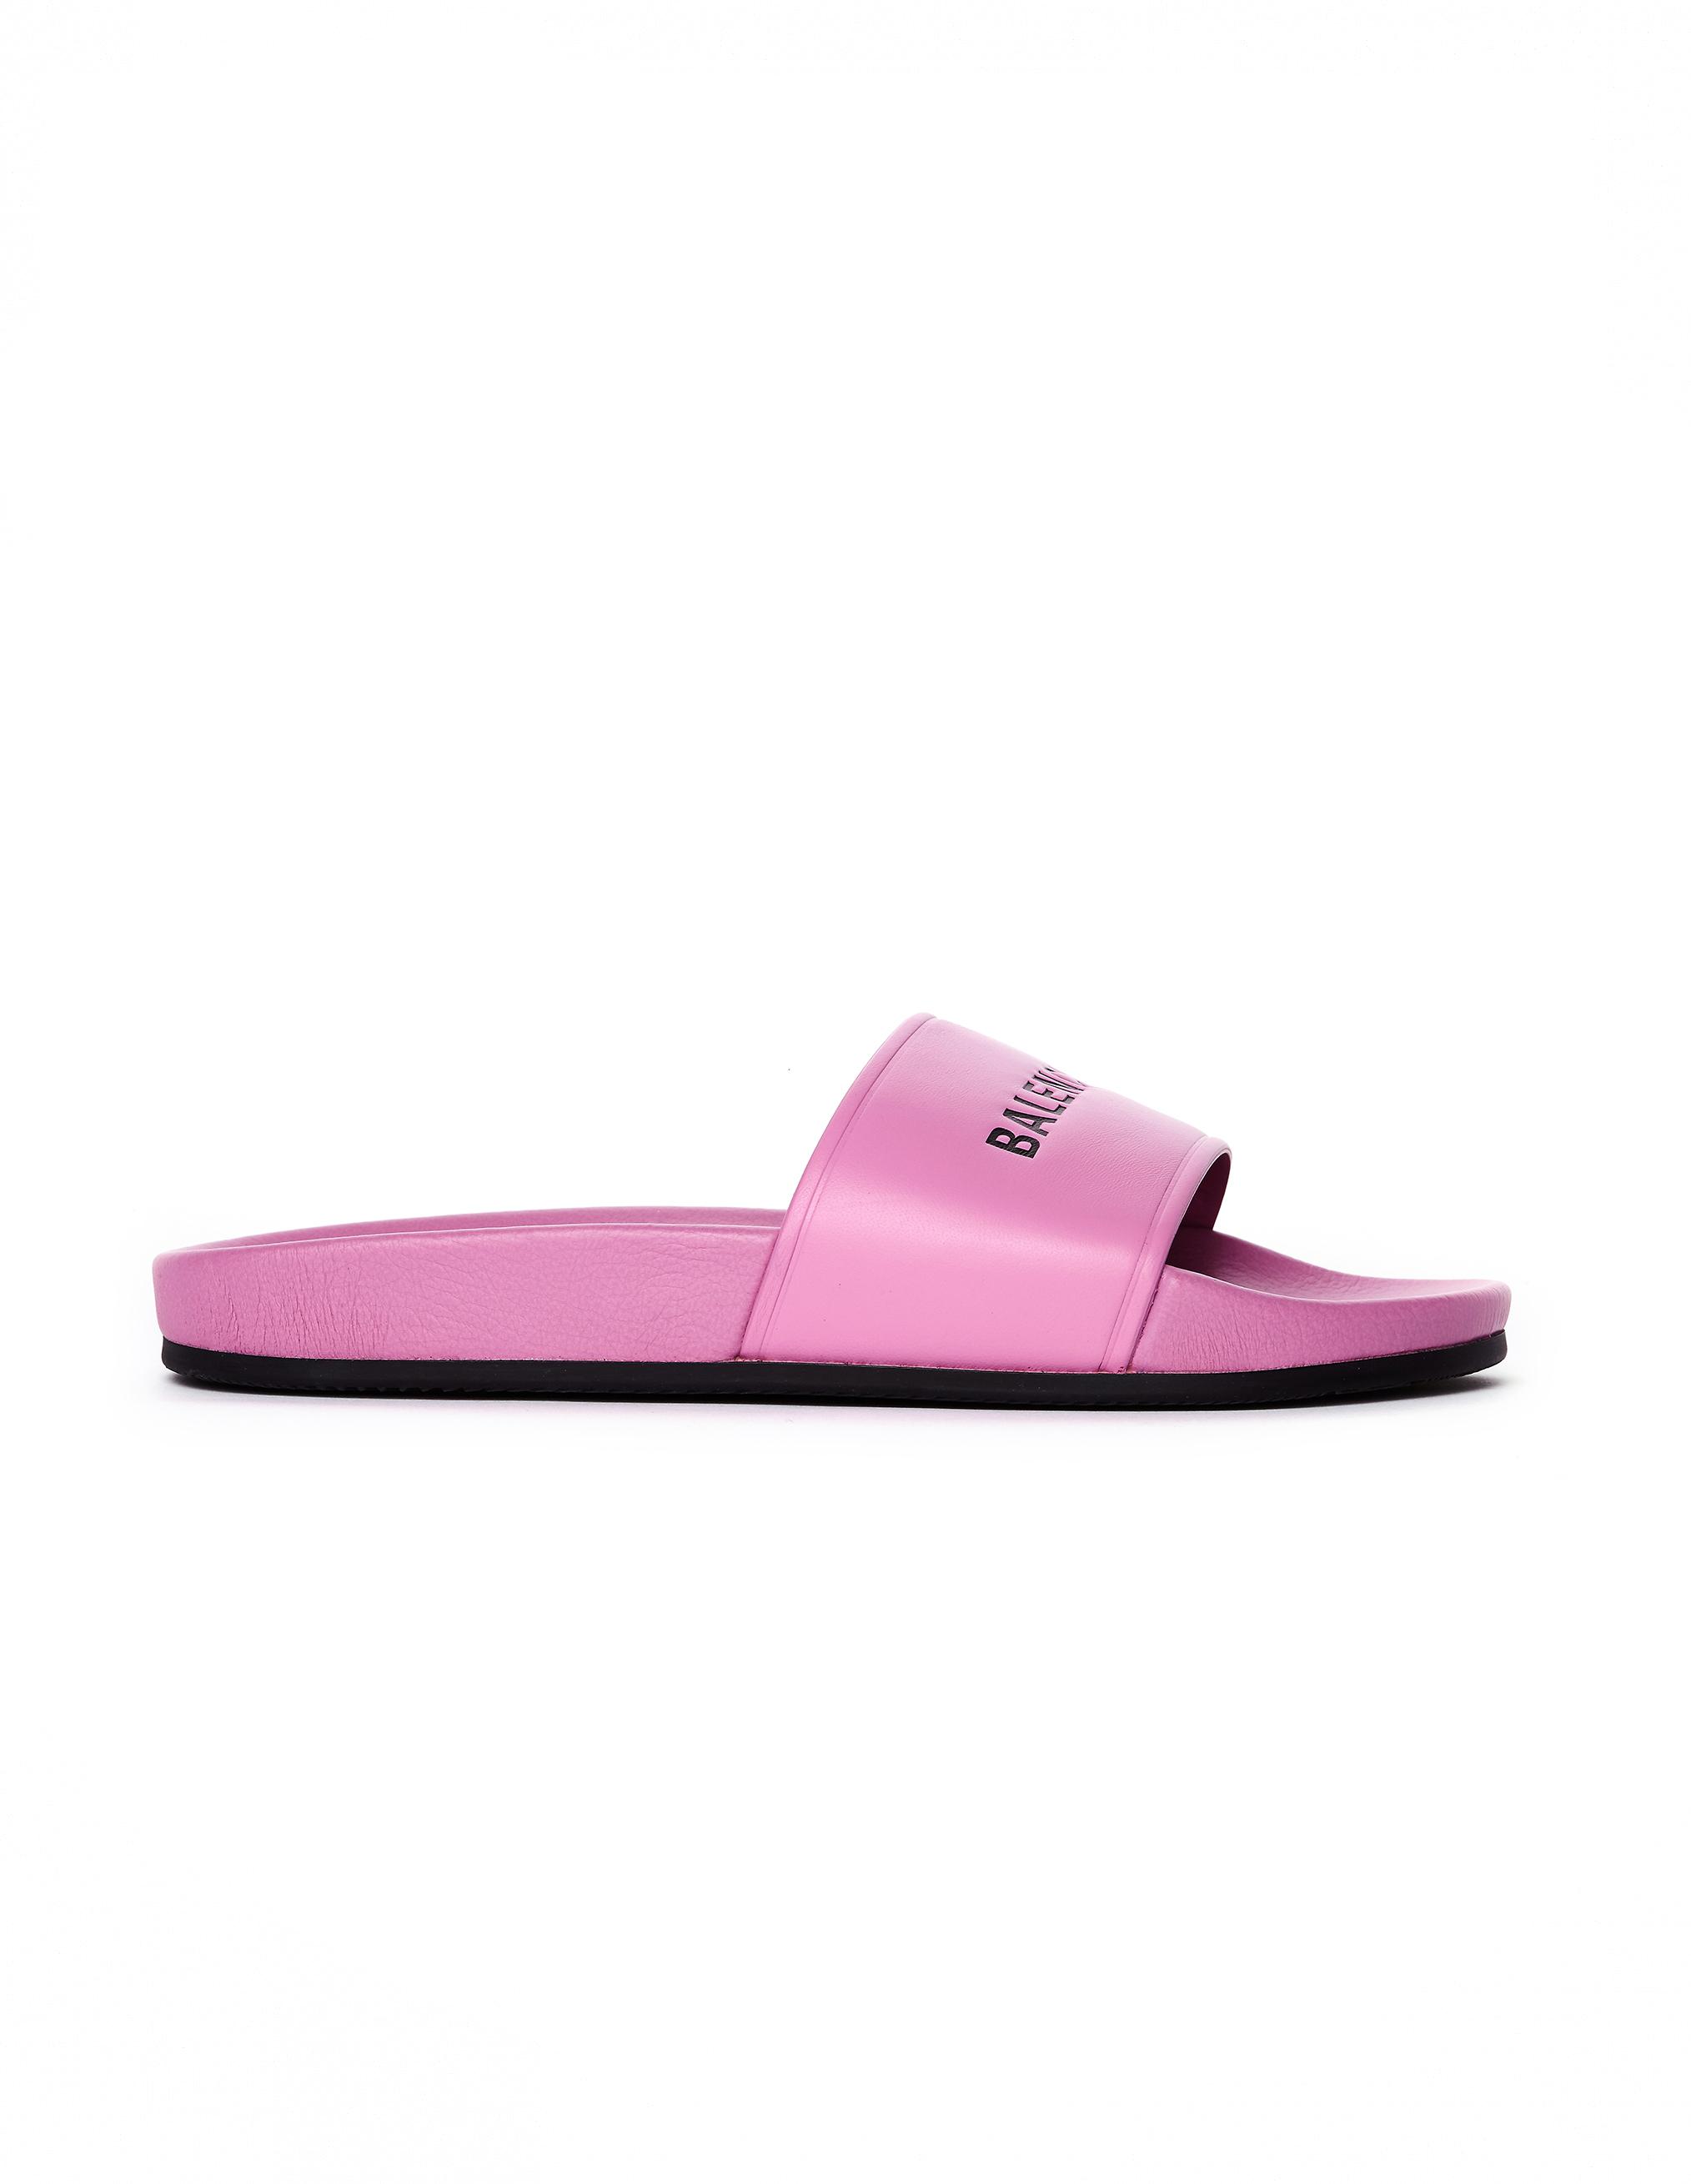 Balenciaga Leather Logo Slides in Pink | Lyst